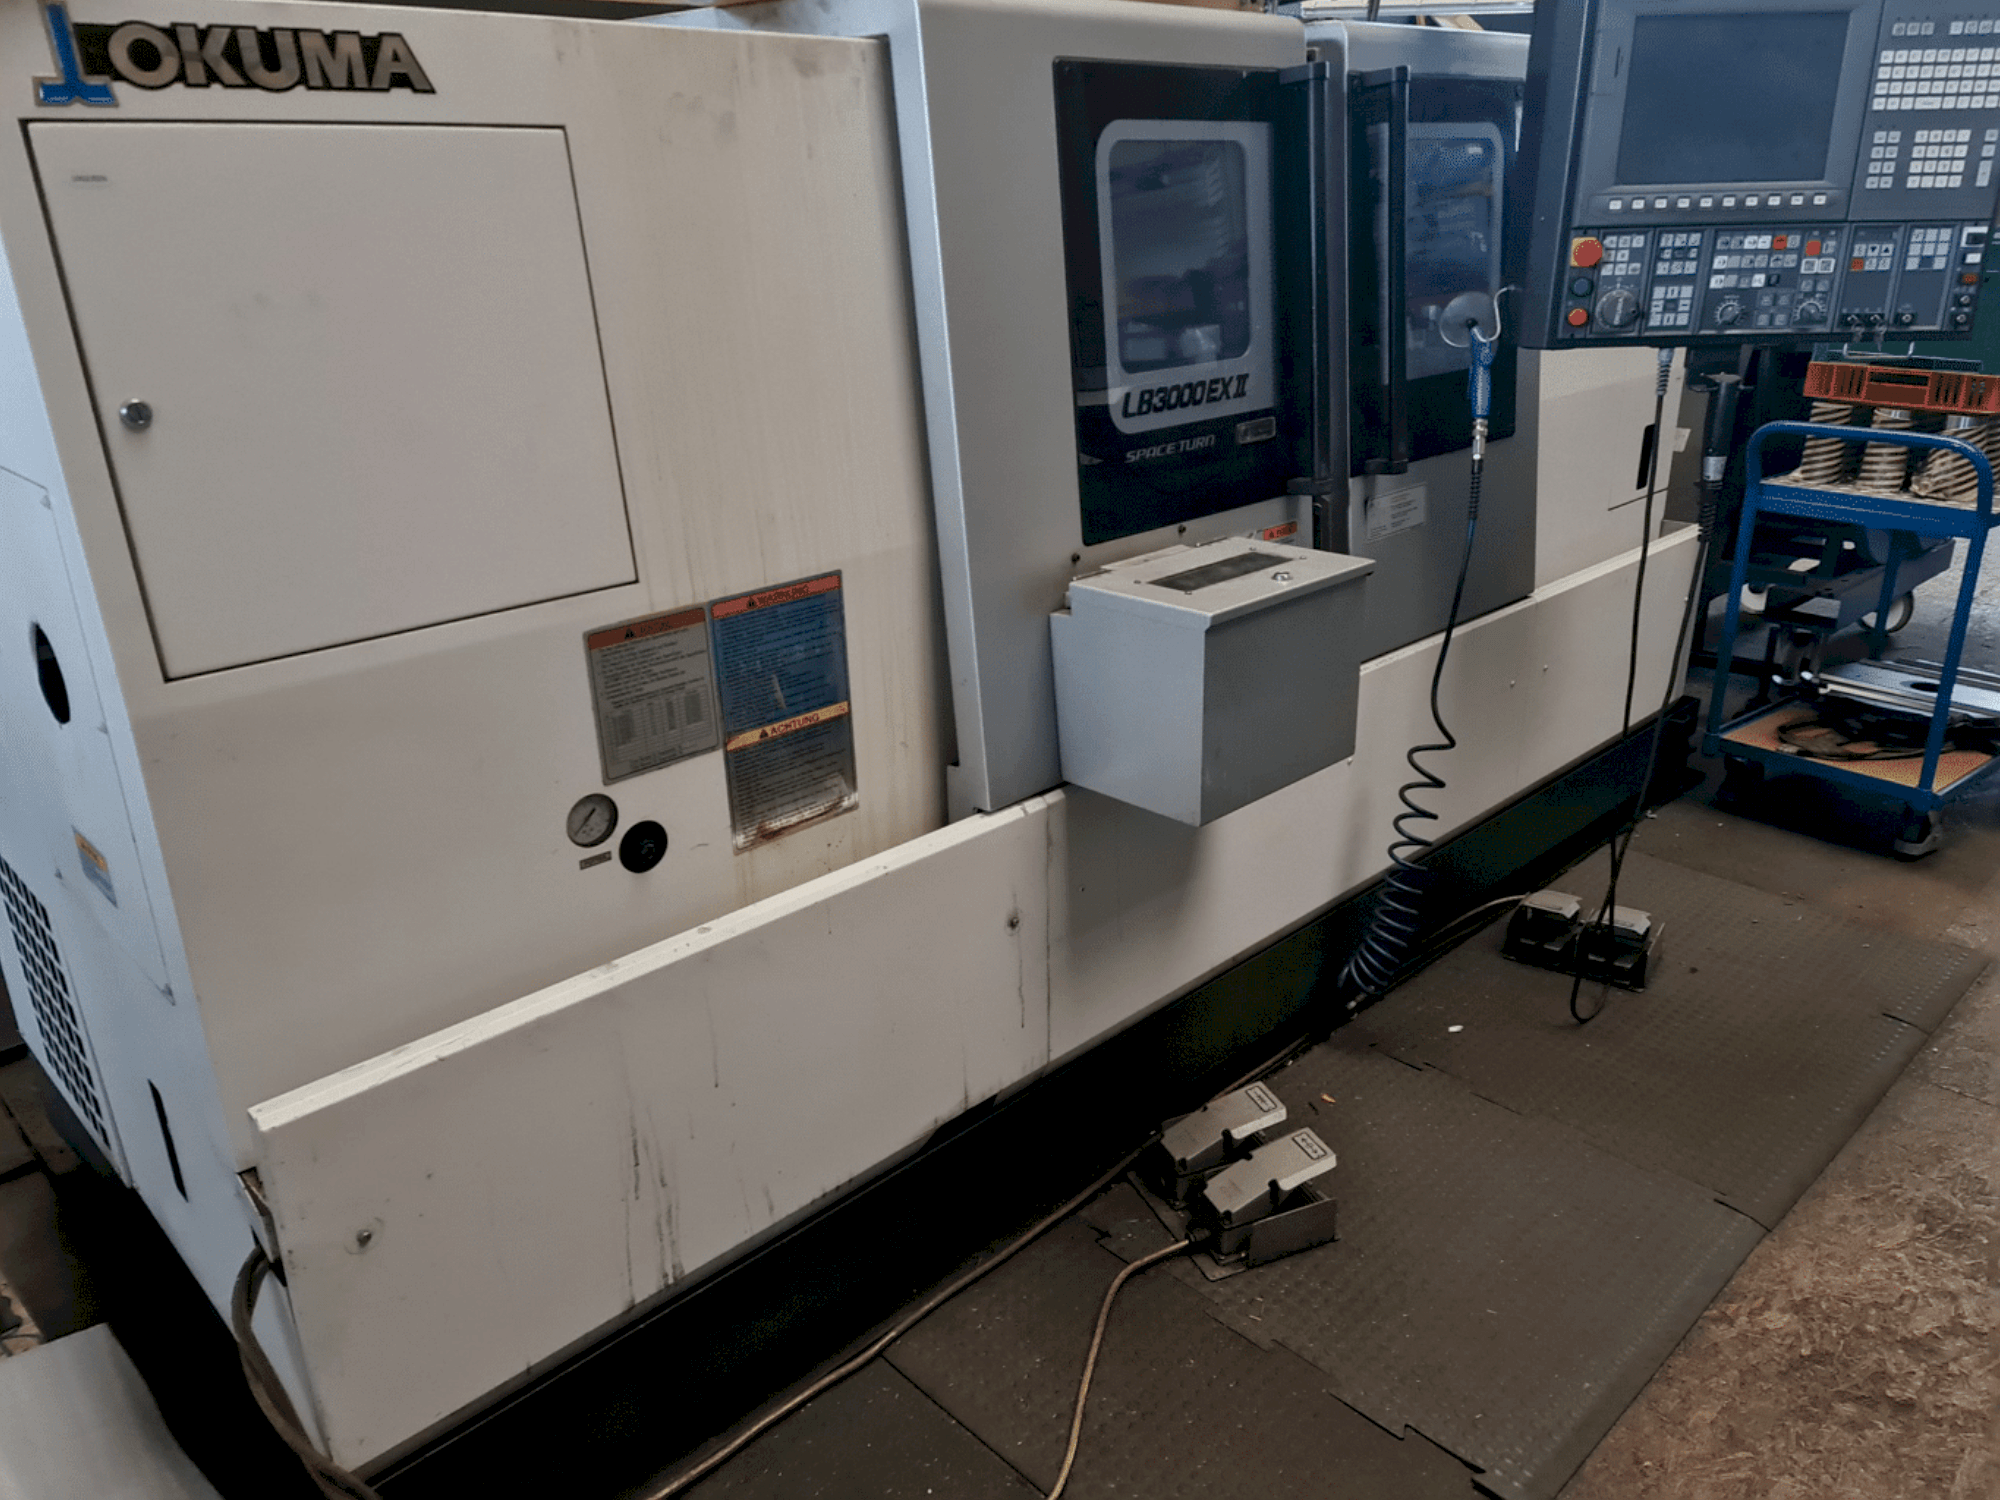 Vista Frontal  da Okuma LB3000 EX II  máquina